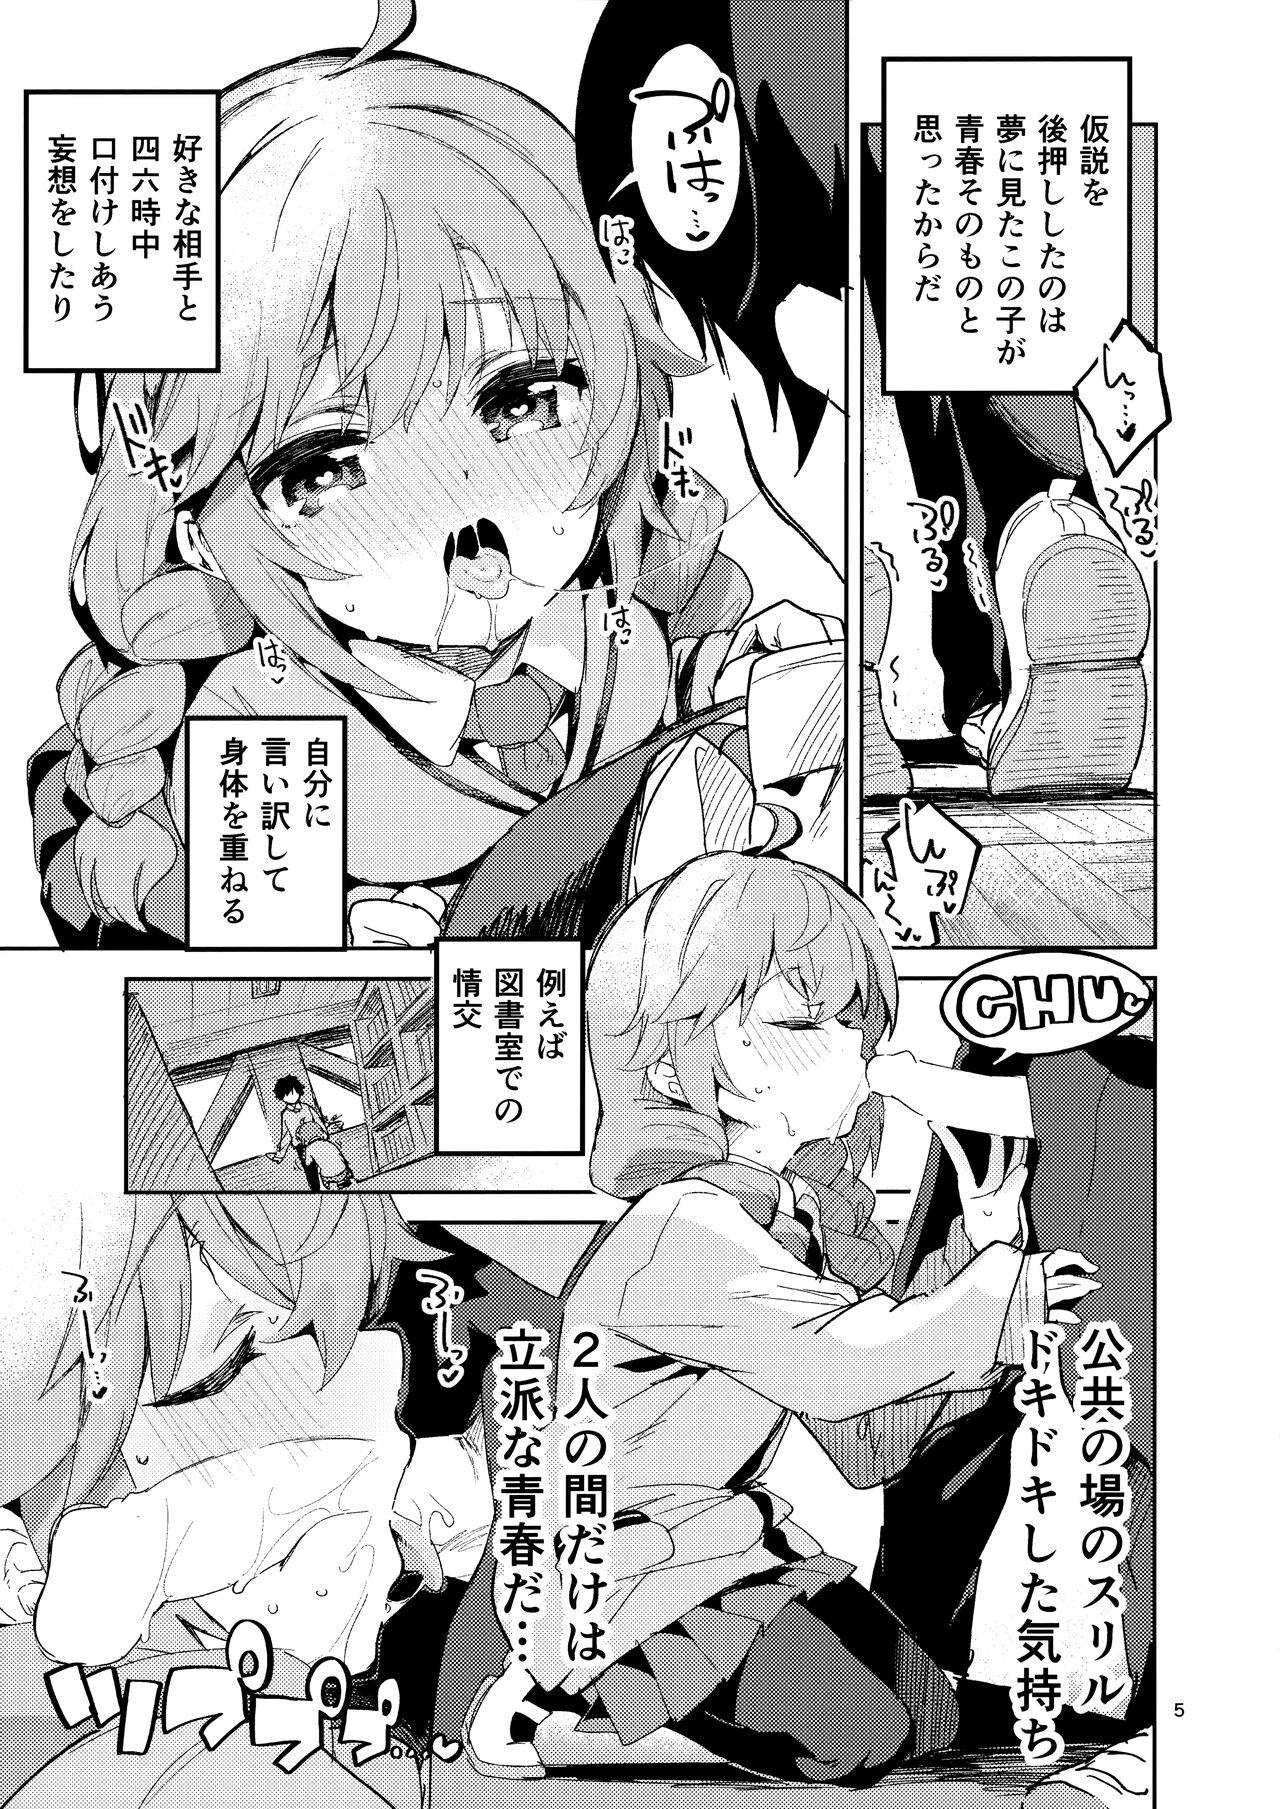 Club Seishun no Teigi - Princess connect Weird - Page 4